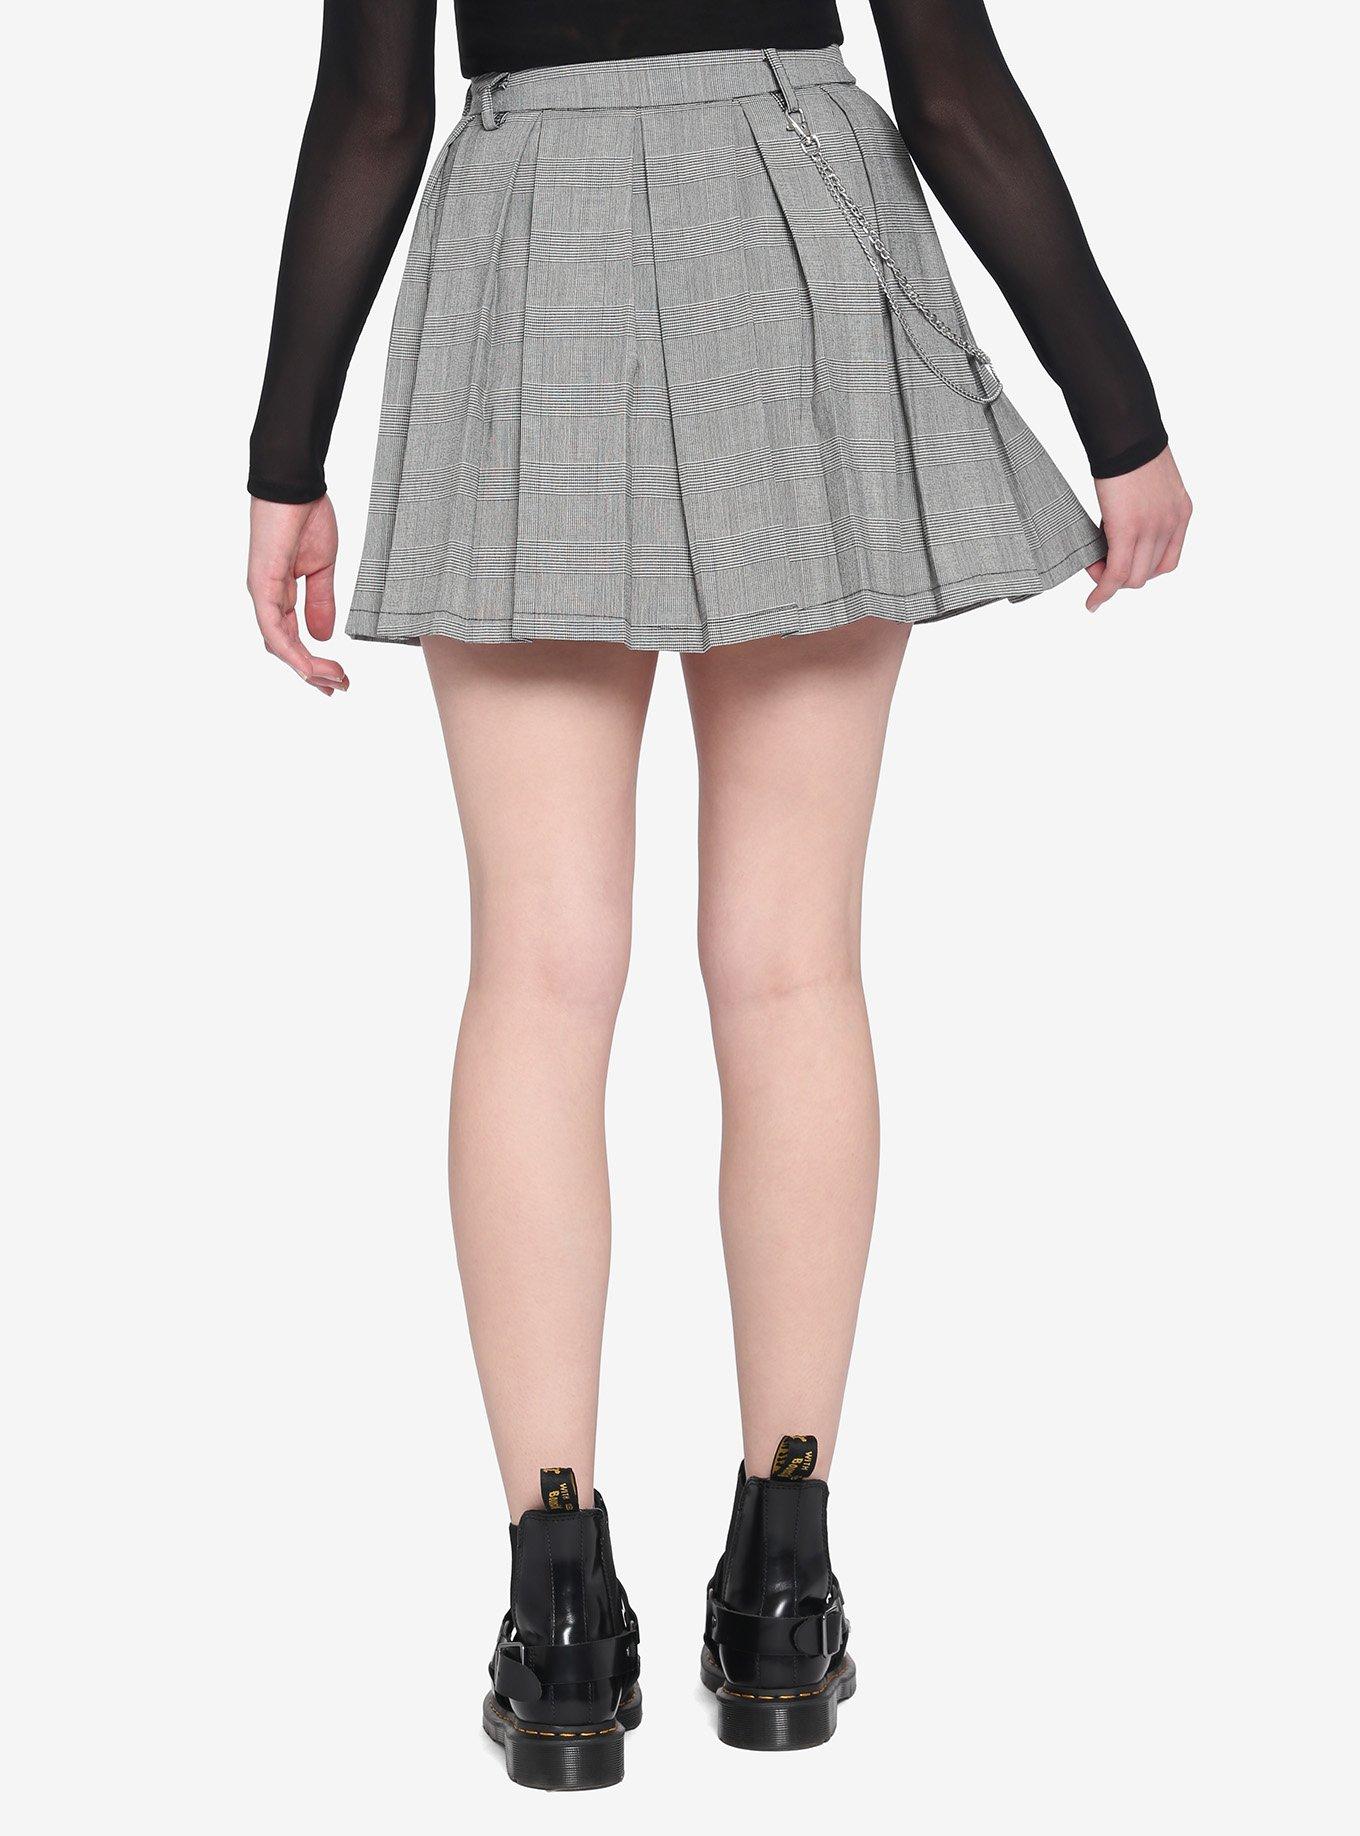 Grey Plaid Chain Pleated Skirt, PLAID - GREY, alternate